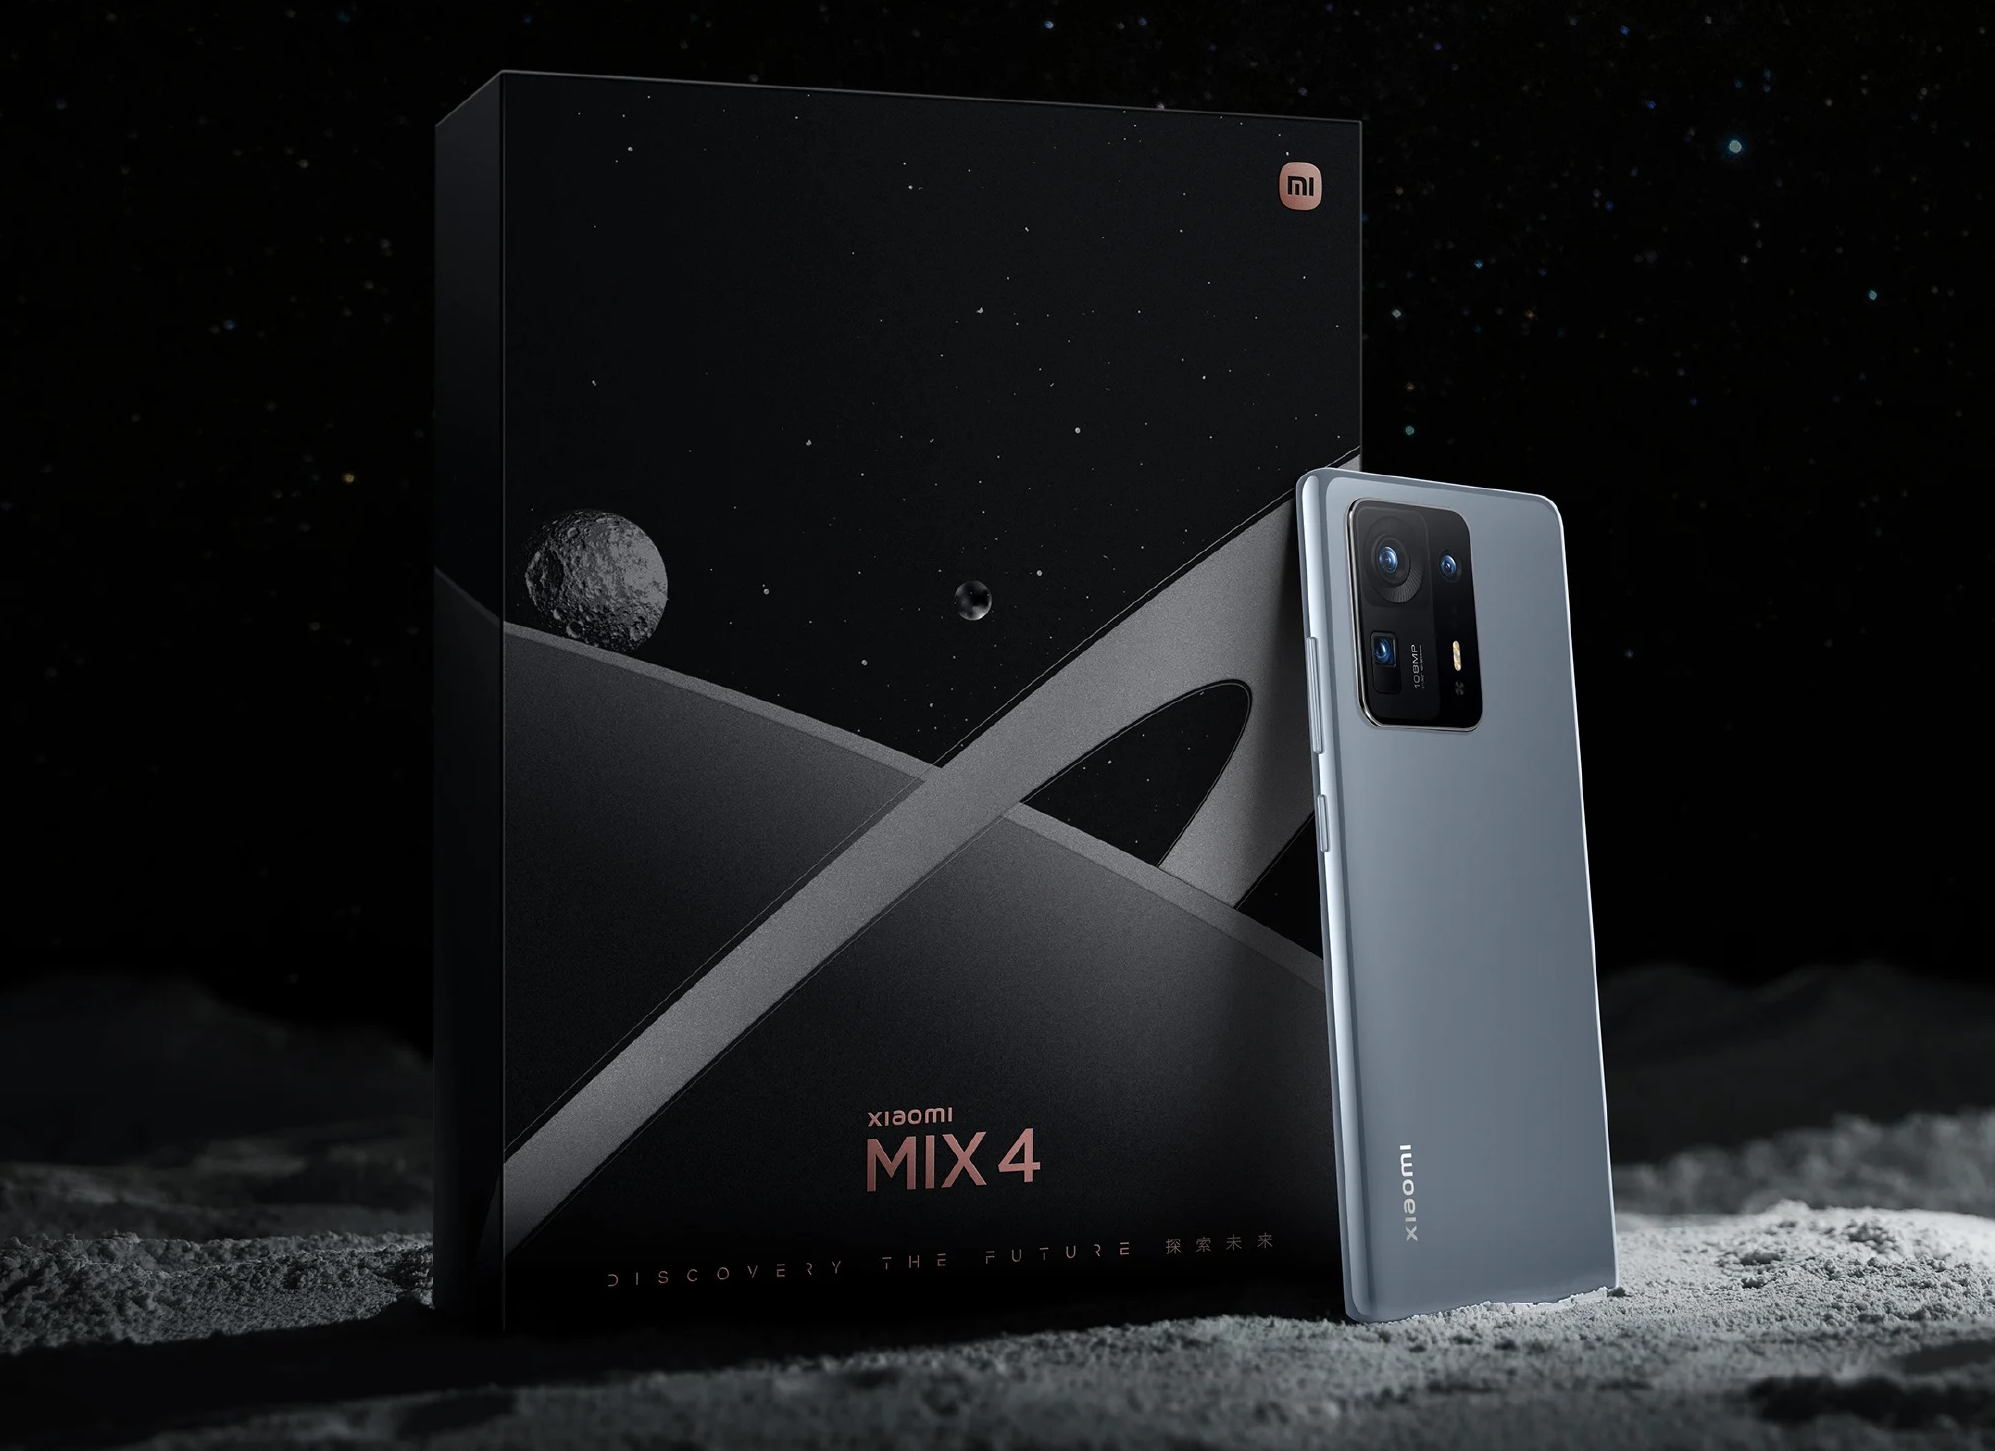 Presentado el smartphone espacial Xiaomi Mix 4 Exploration